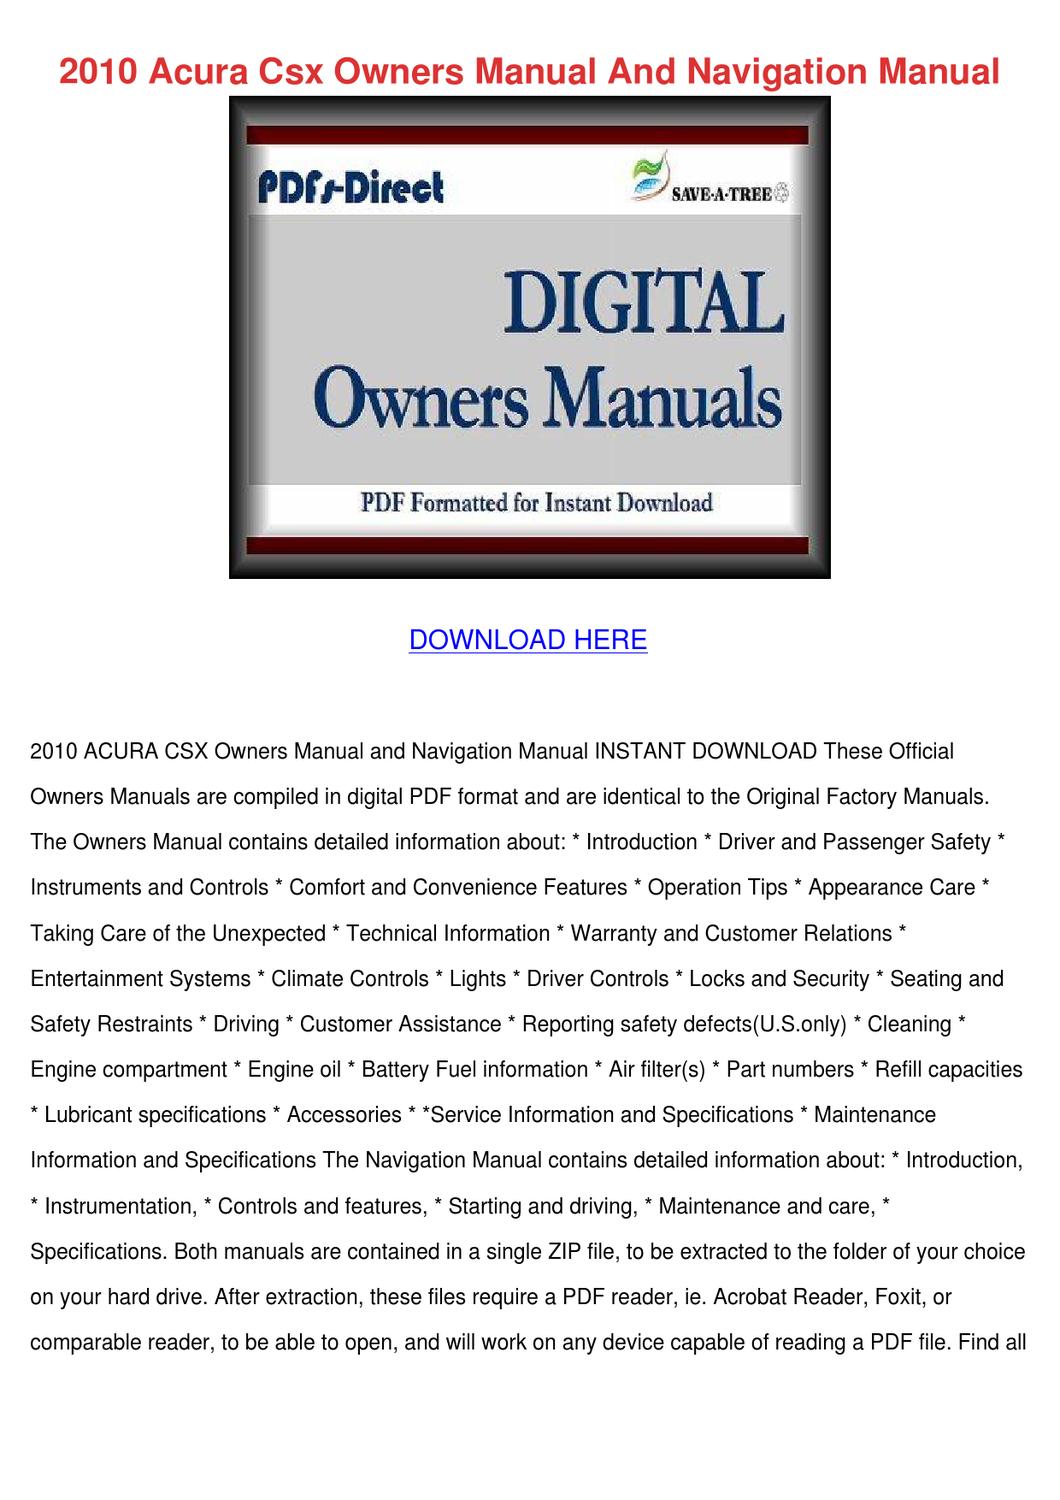 1997 chevy silverado owners manual pdf